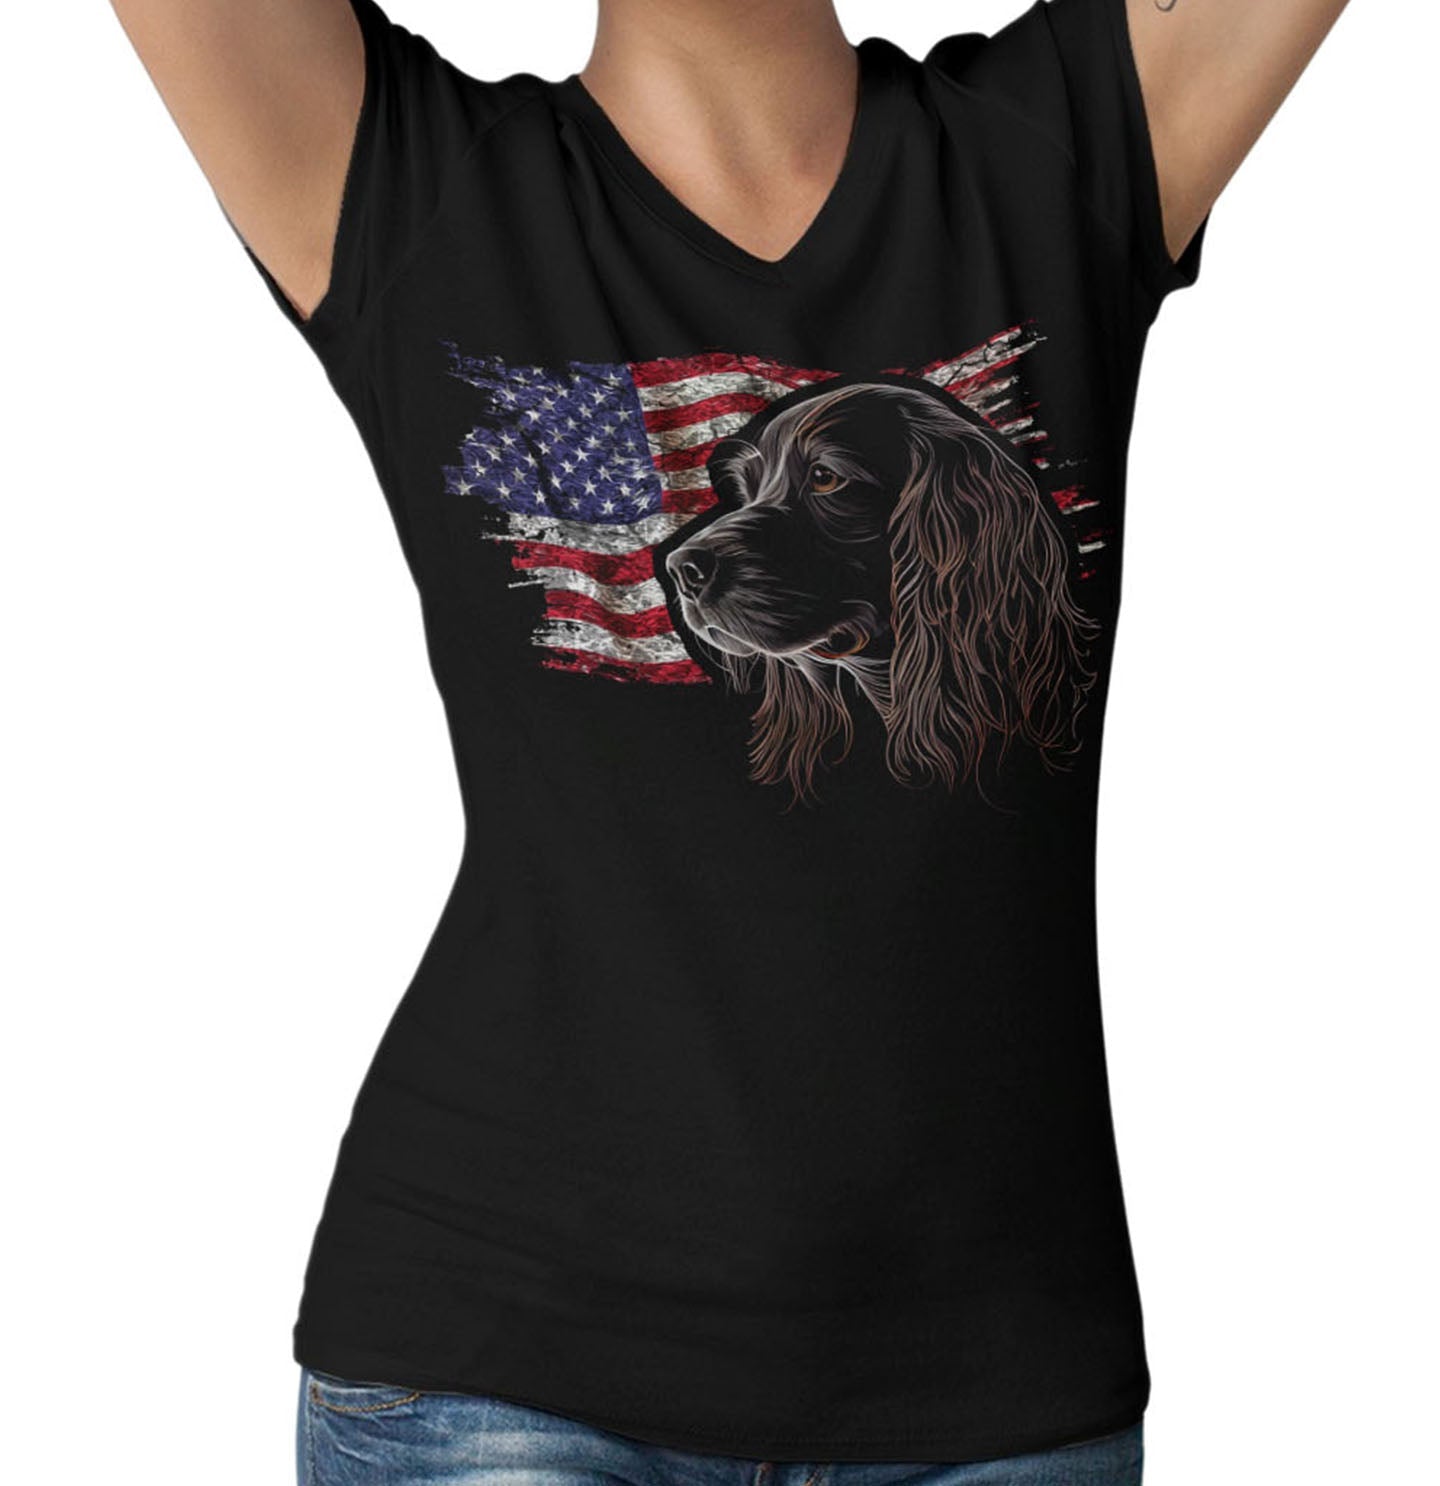 Patriotic Cocker Spaniel American Flag - Women's V-Neck T-Shirt